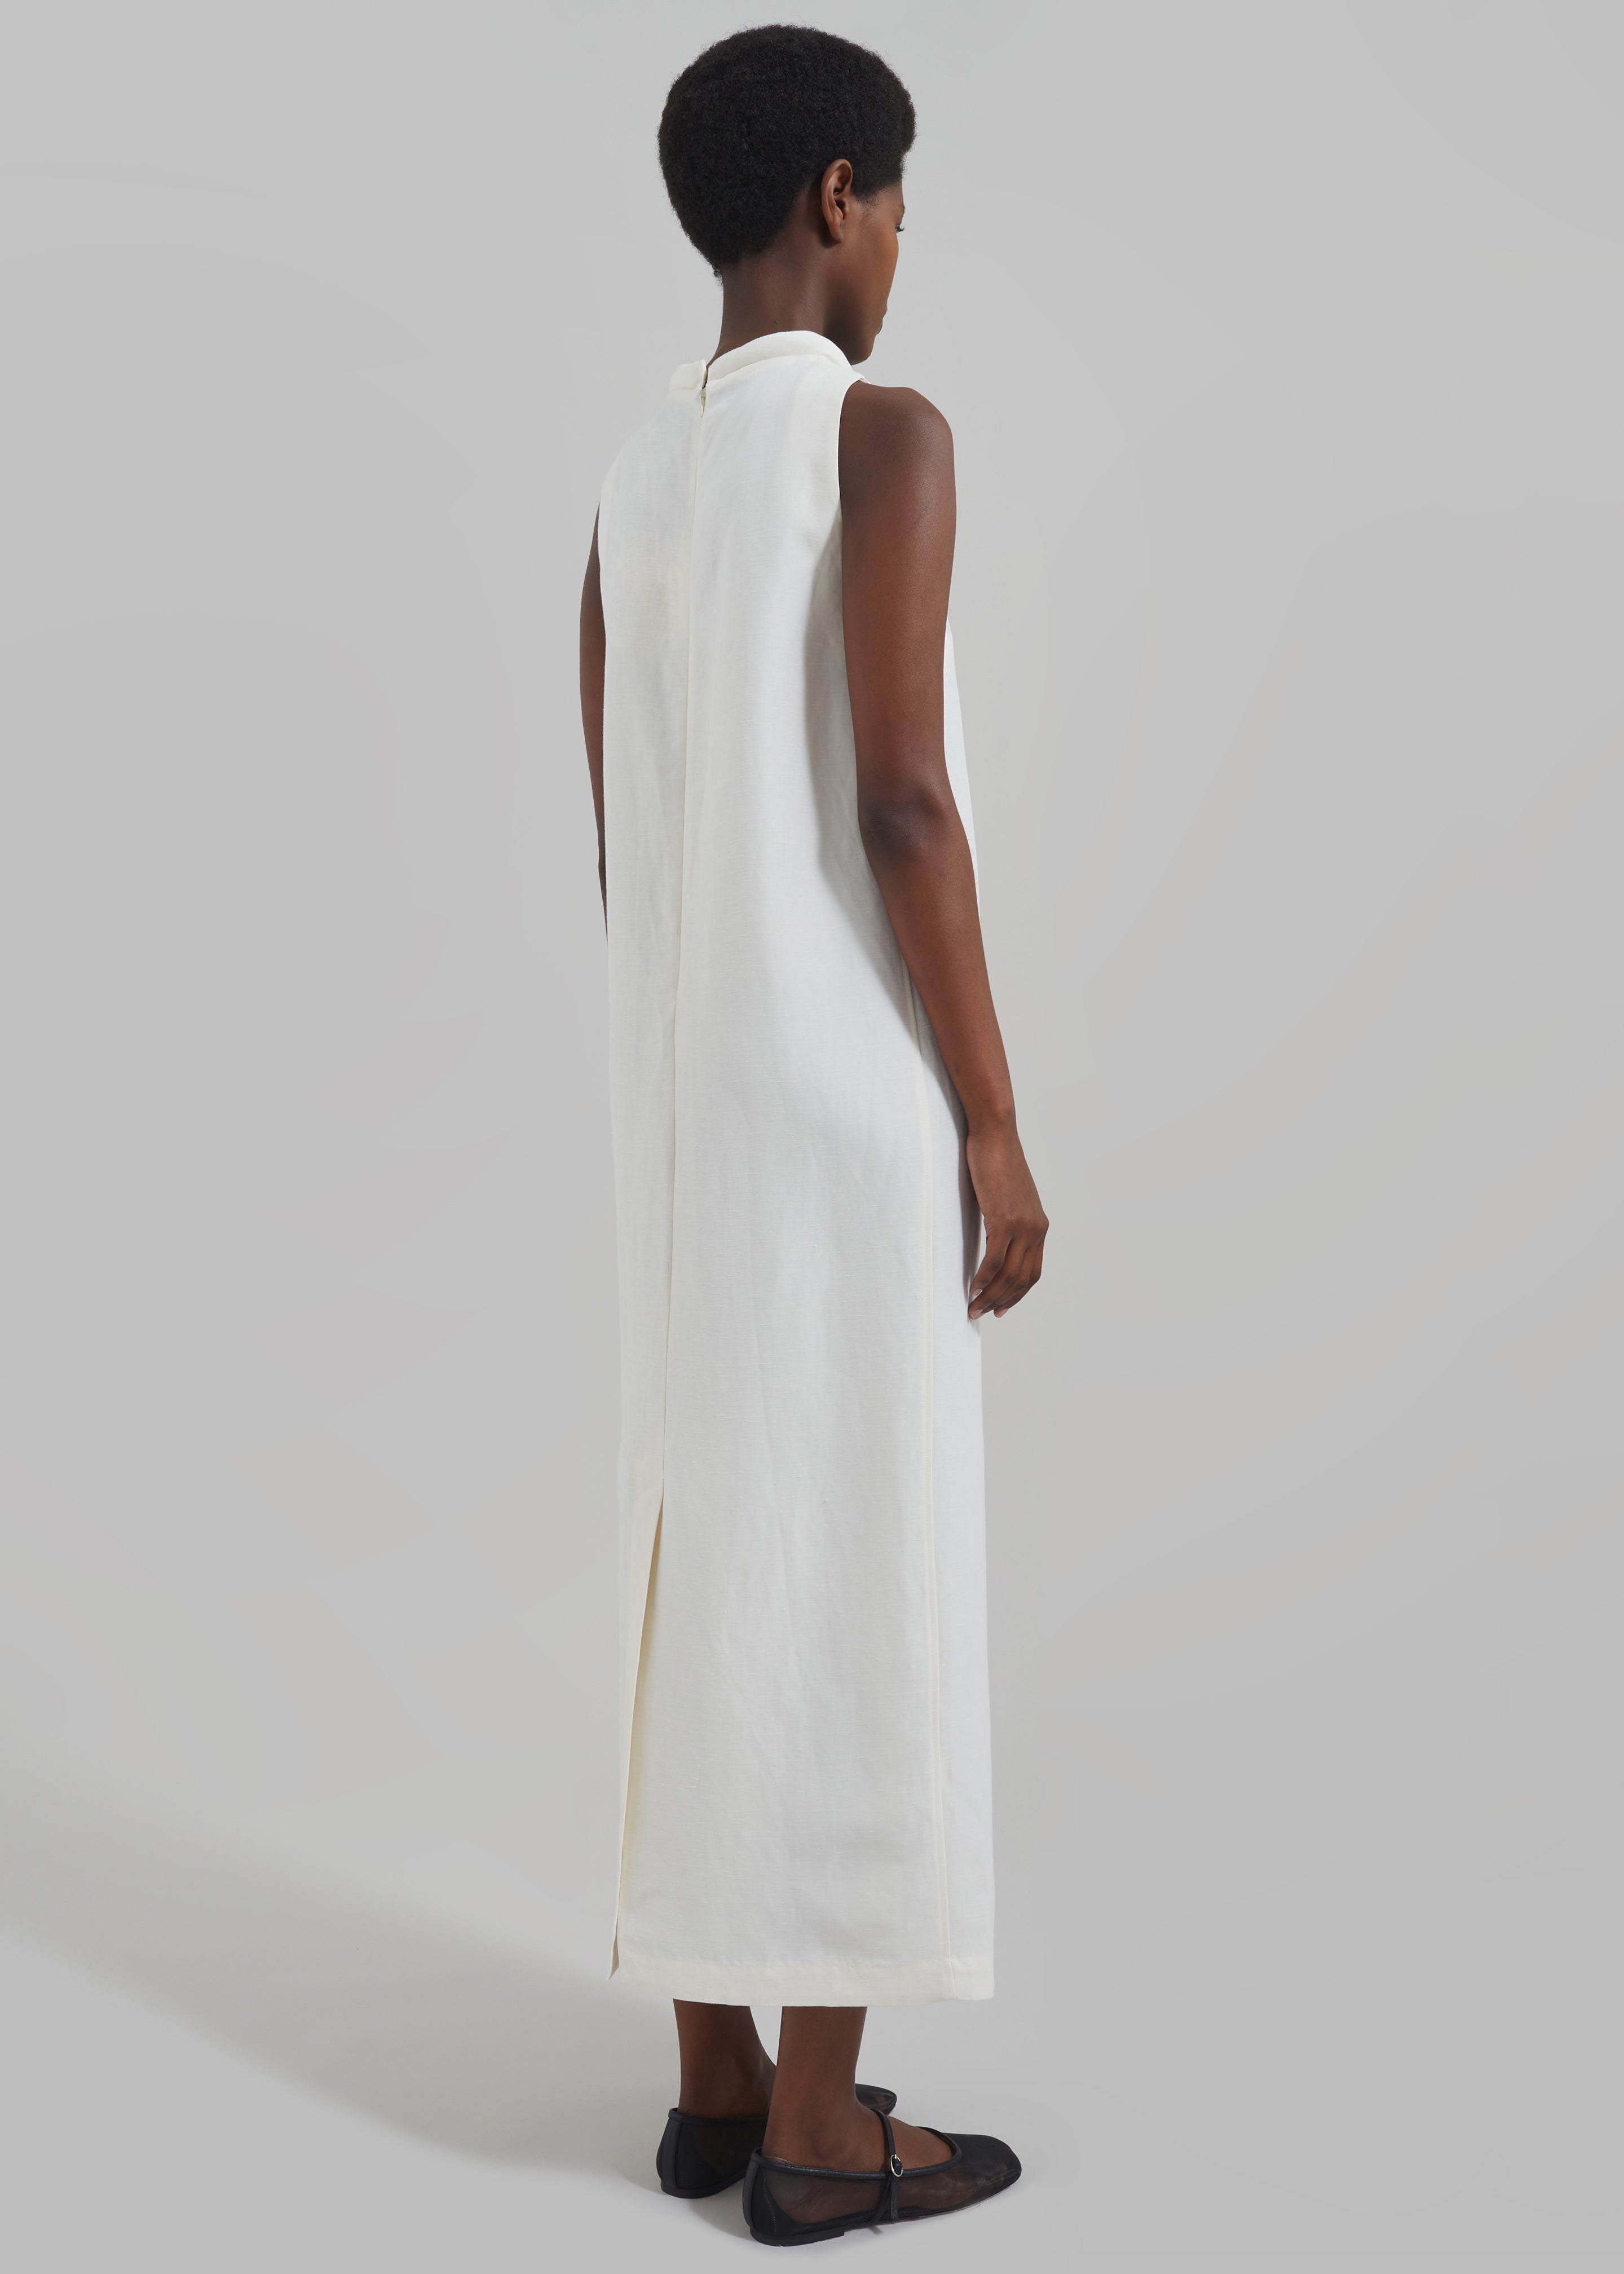 Loulou Studio Rivida Mixed Linen Dress - Ivory - 6